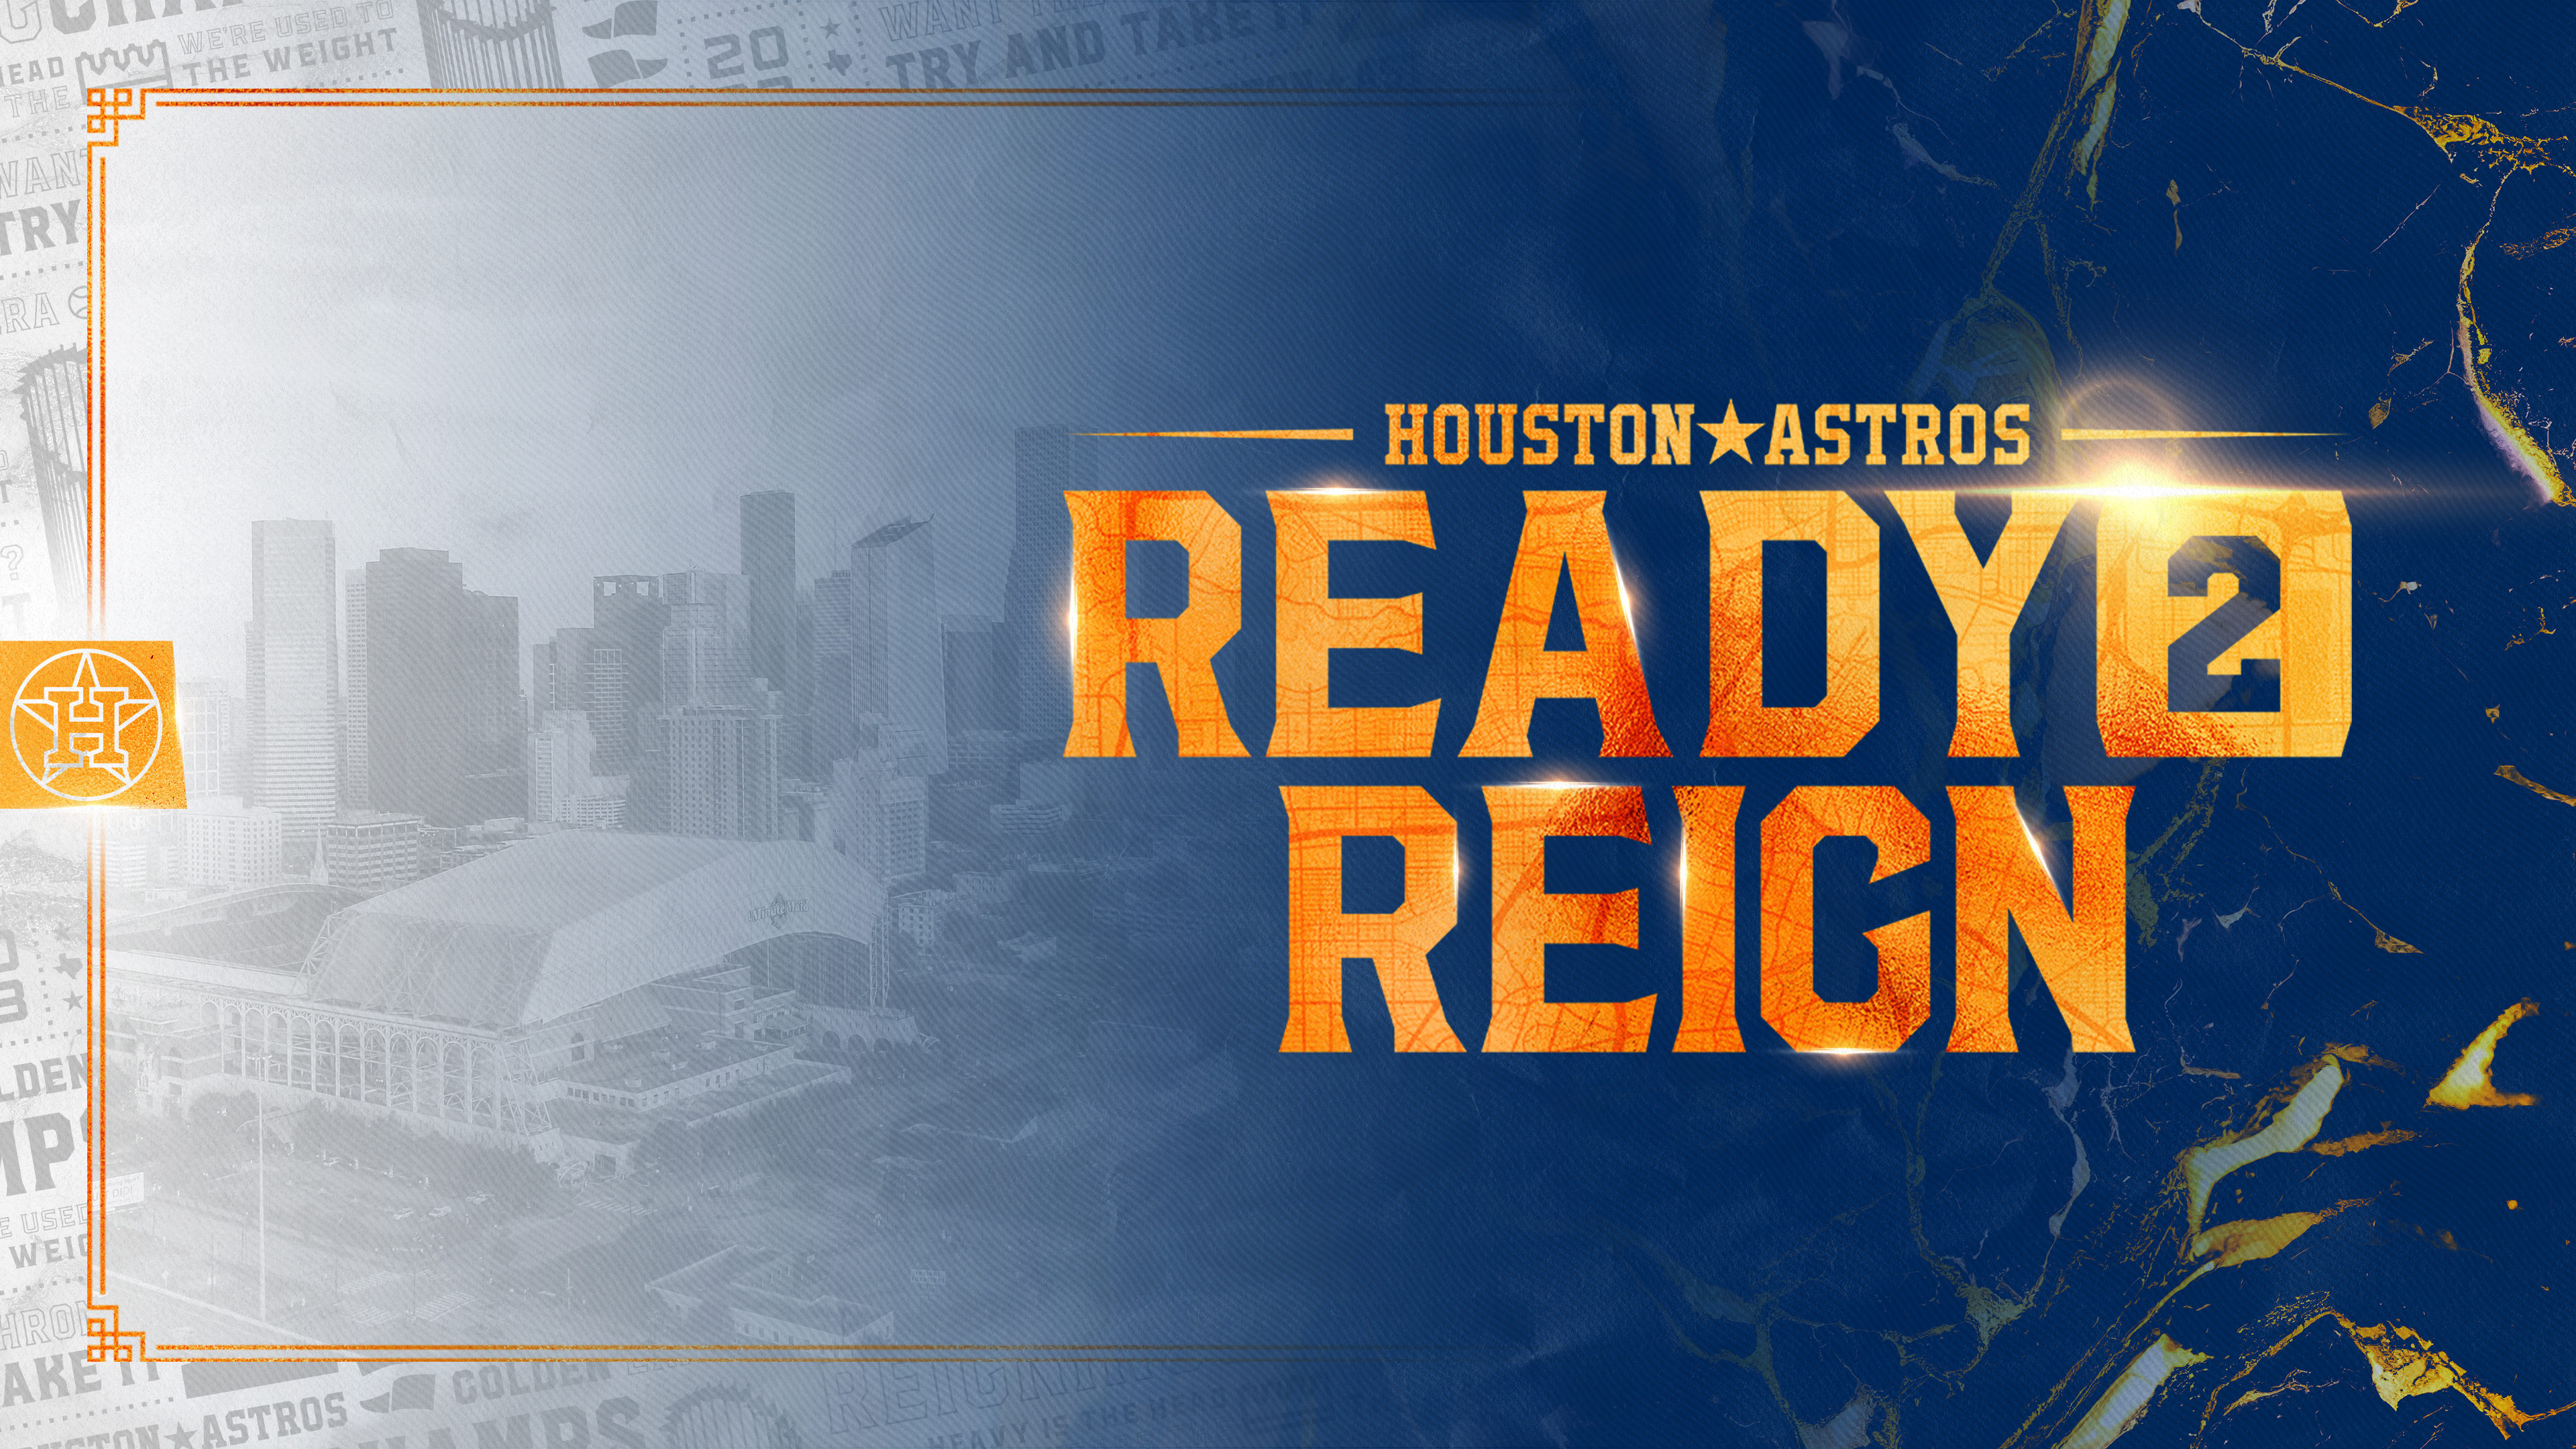 Houston Astros vs Texas Rangers 2023 ALCS PNG Download